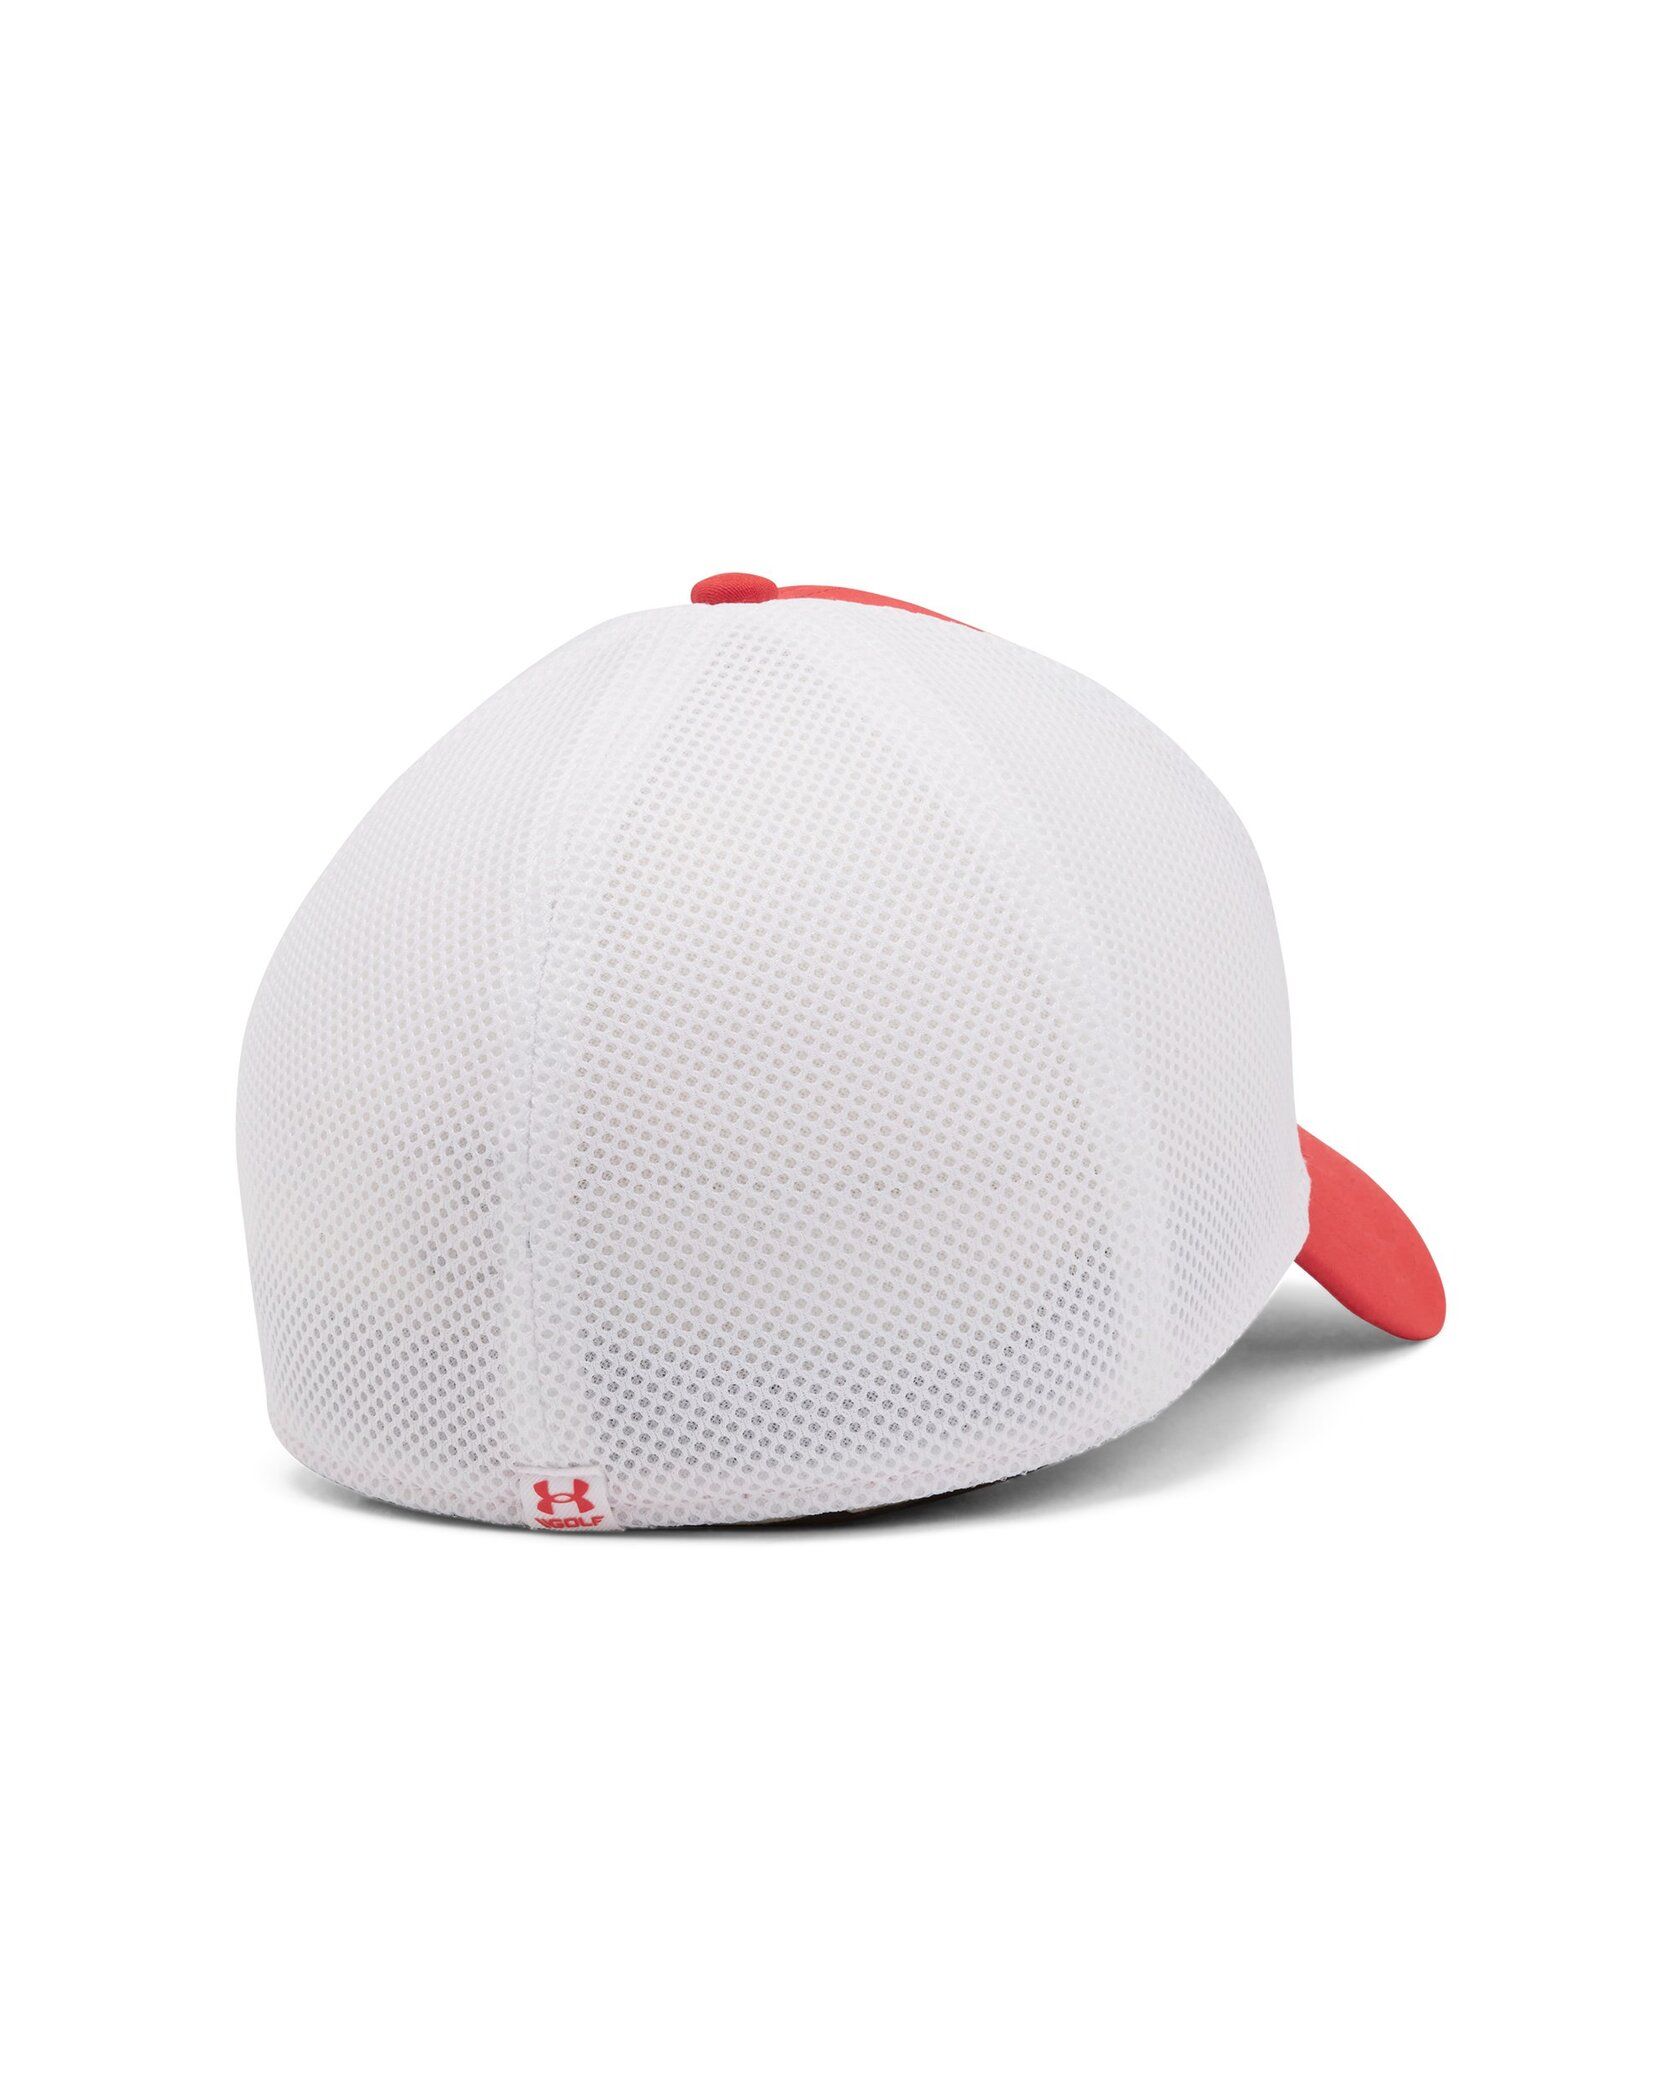 JC091 AWD Ultra-Light Cap - Workout Gym Cool Running Baseball Sports Peaked  Hat 